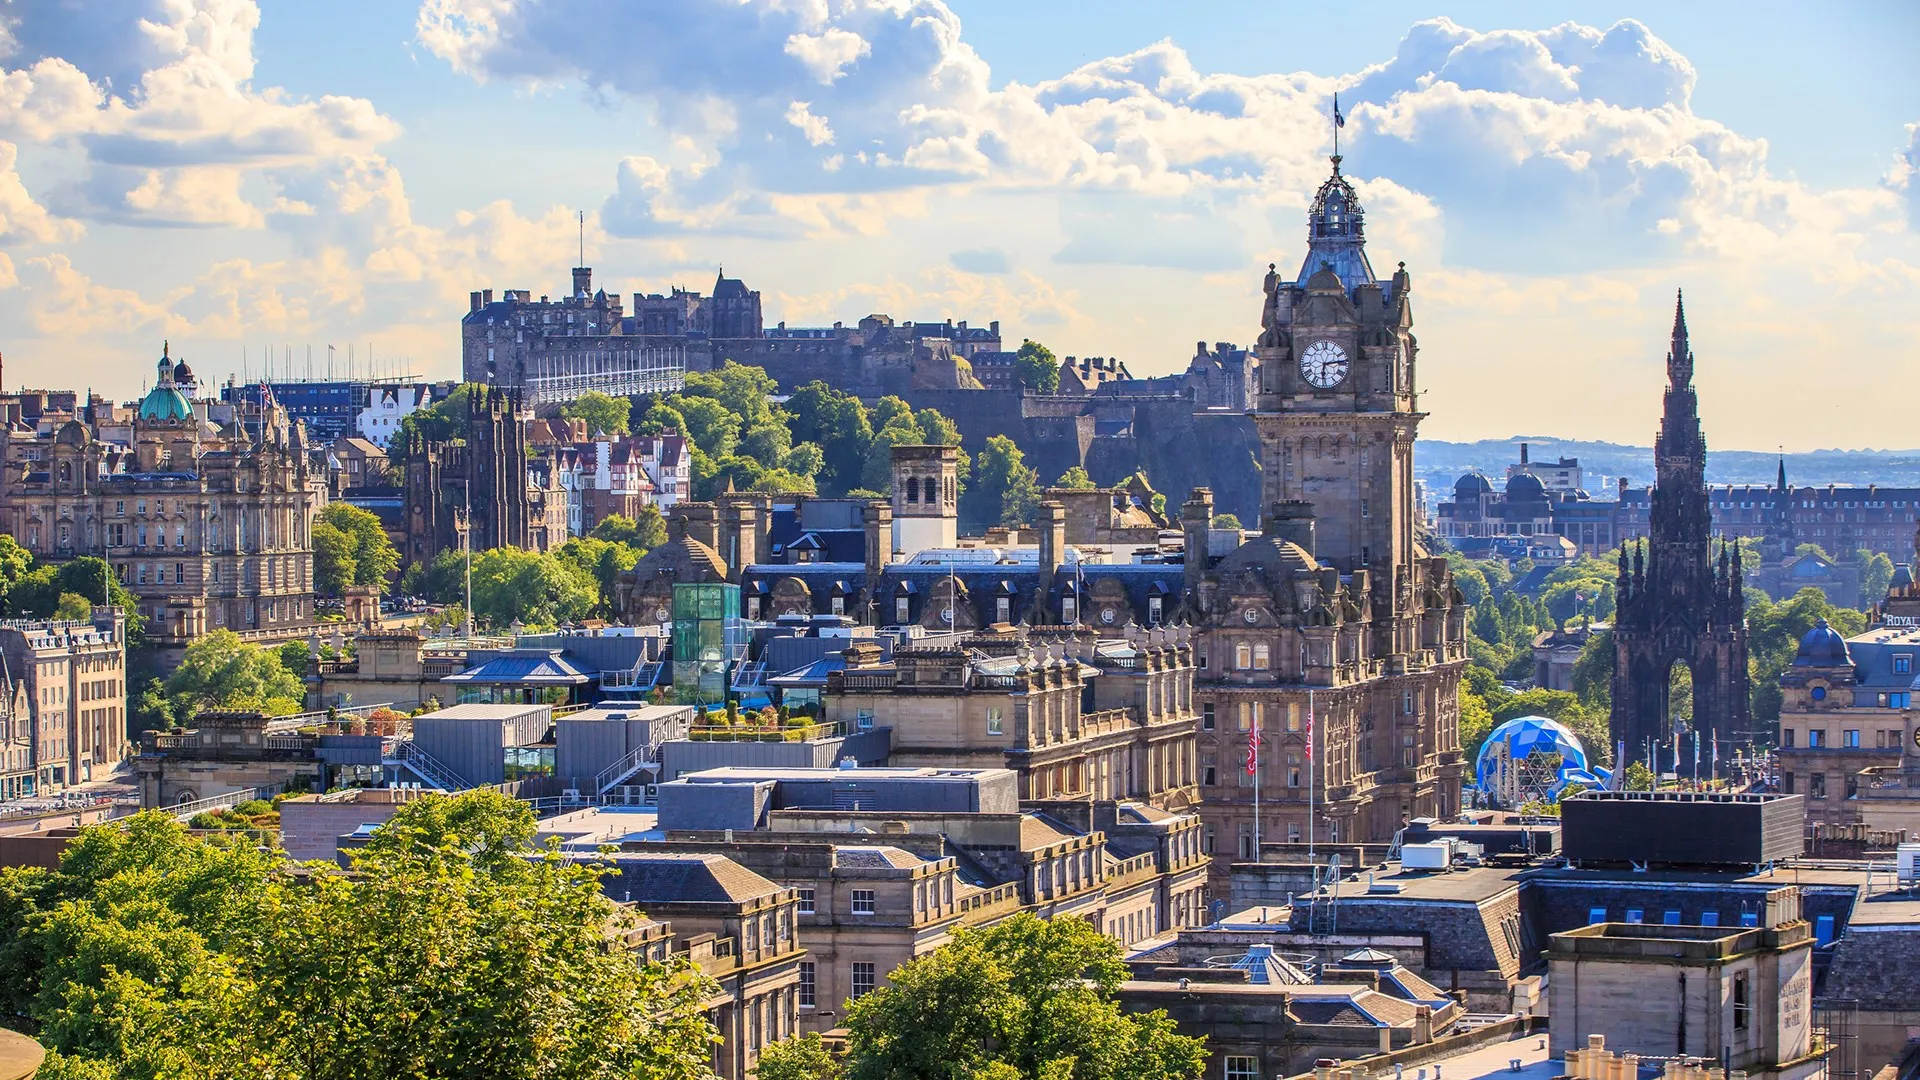 Academic Jobs The historic cityscape of Edinburgh with its prestigious universities highlighted